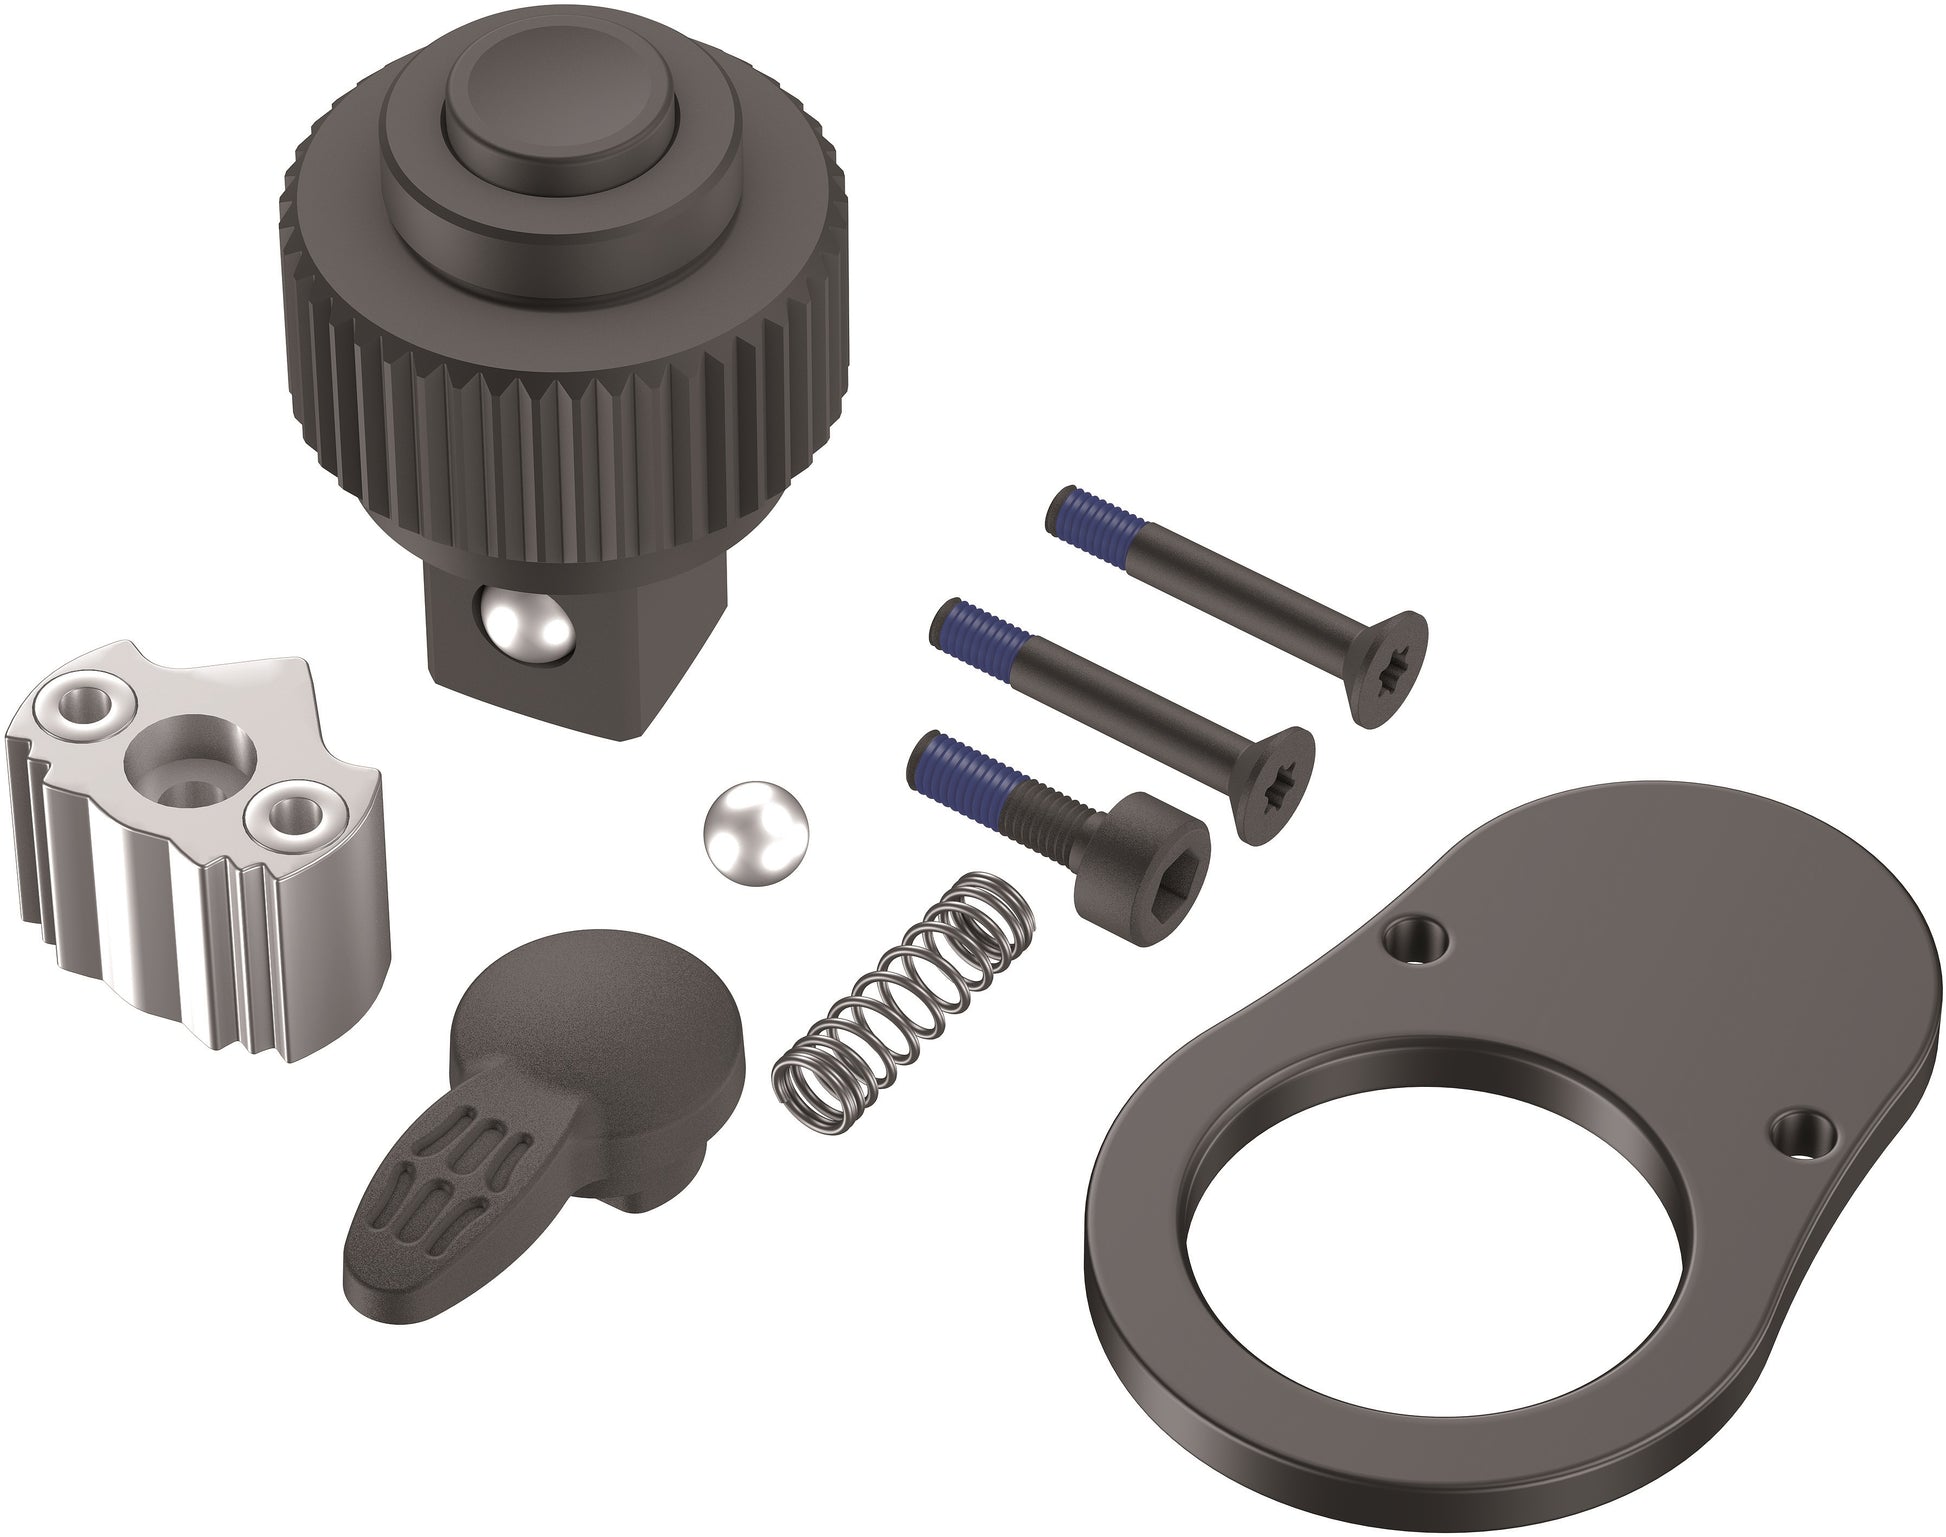 wera 9902 b 1 click torque ratchet wrench repair kit 3/8" 05547624001